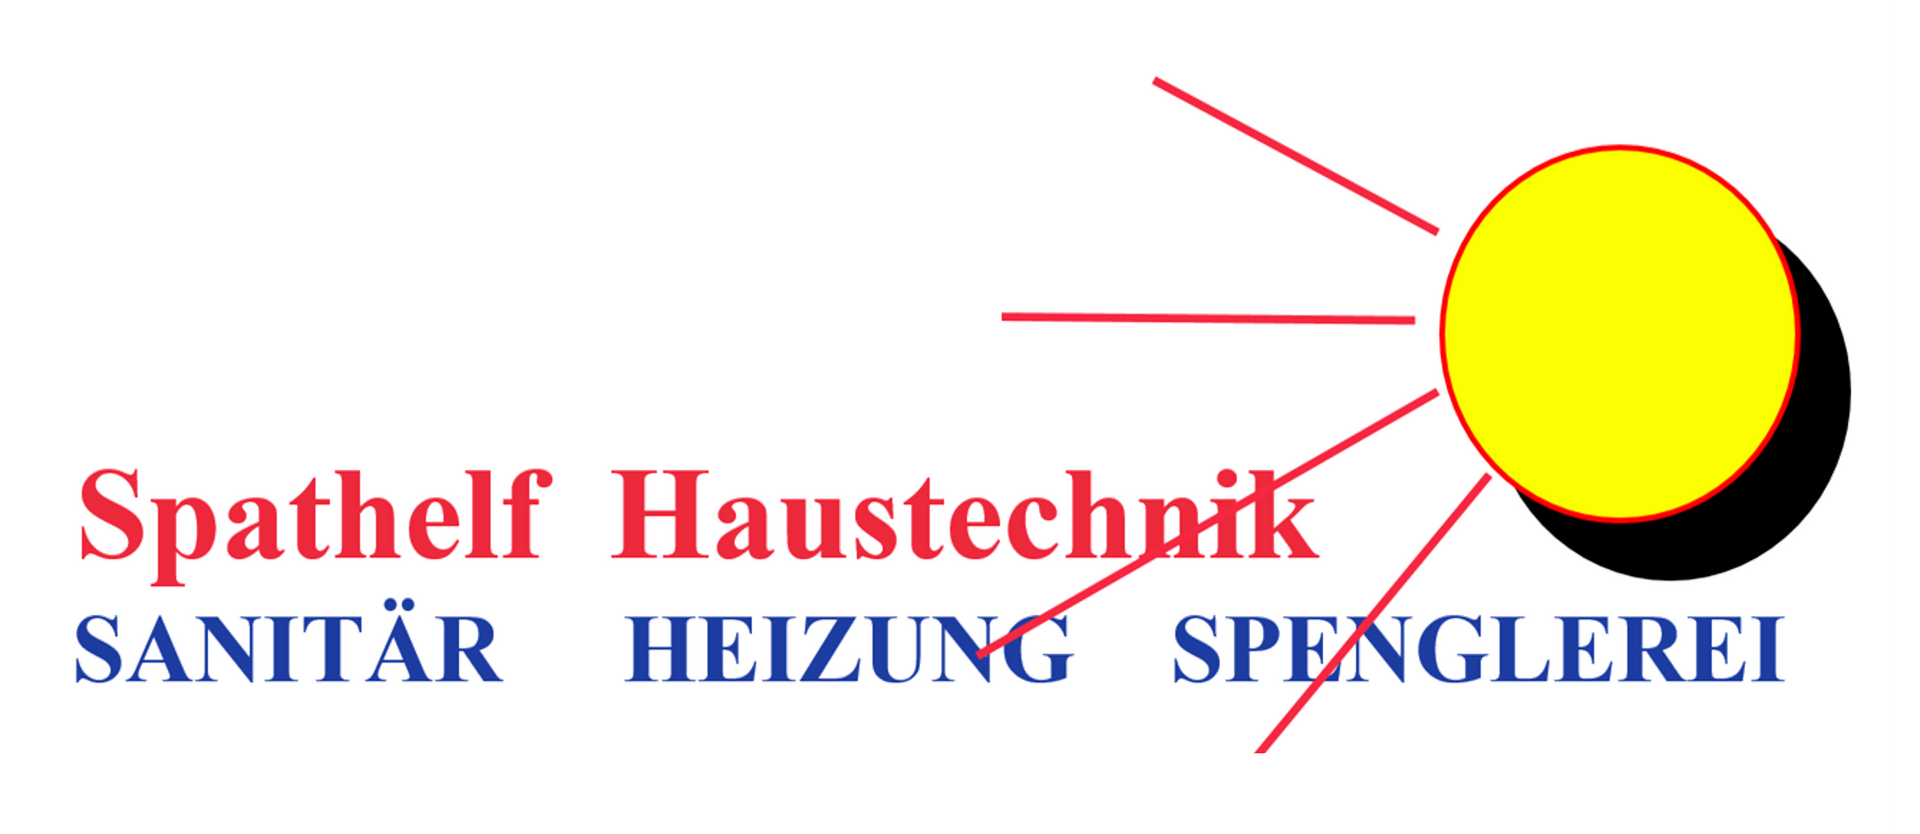 Spathelf Haustechnik GmbH-logo